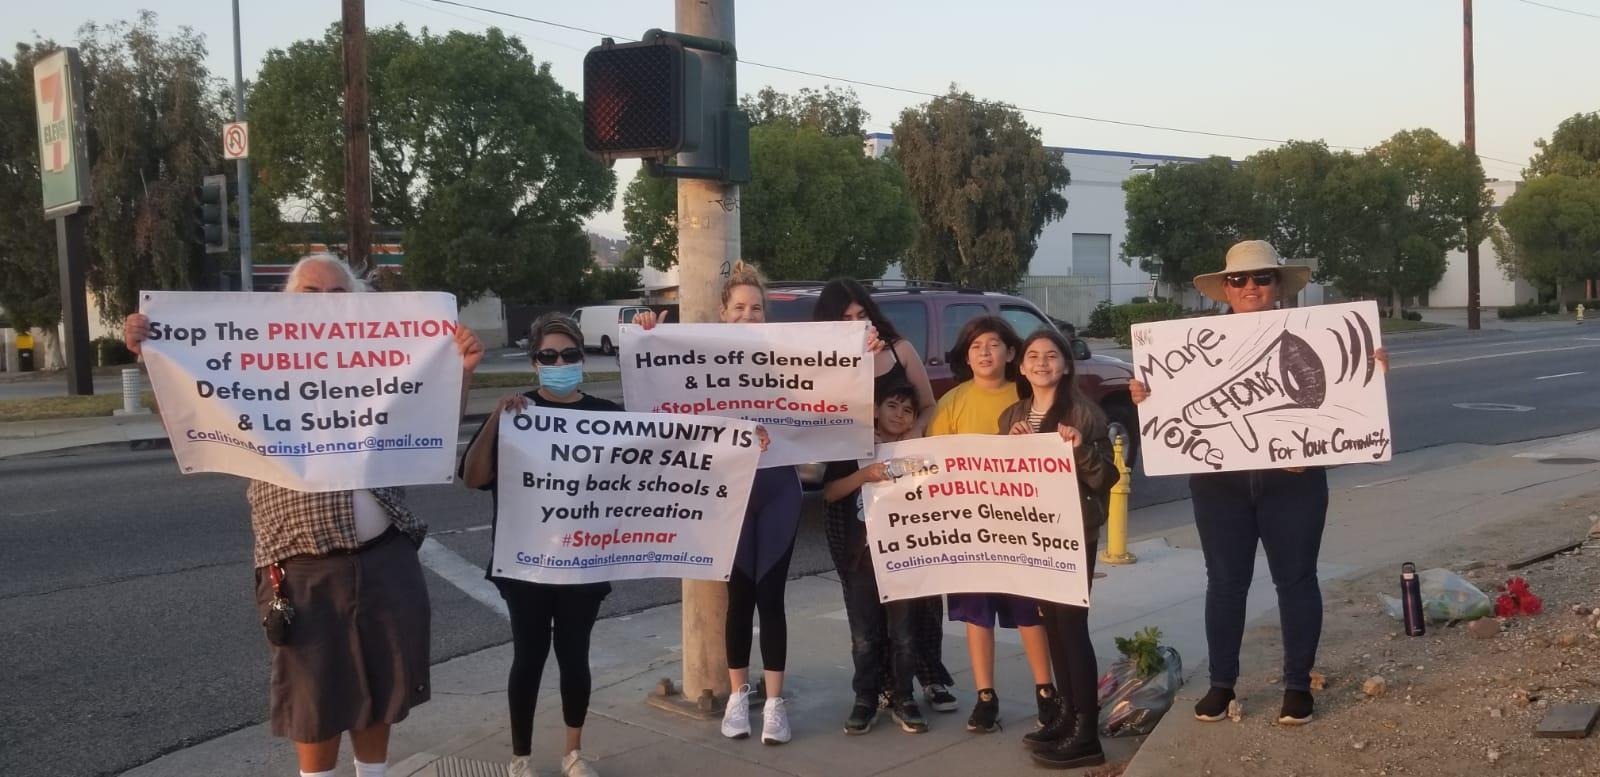 The struggle against land privatization in Hacienda Heights, California ...